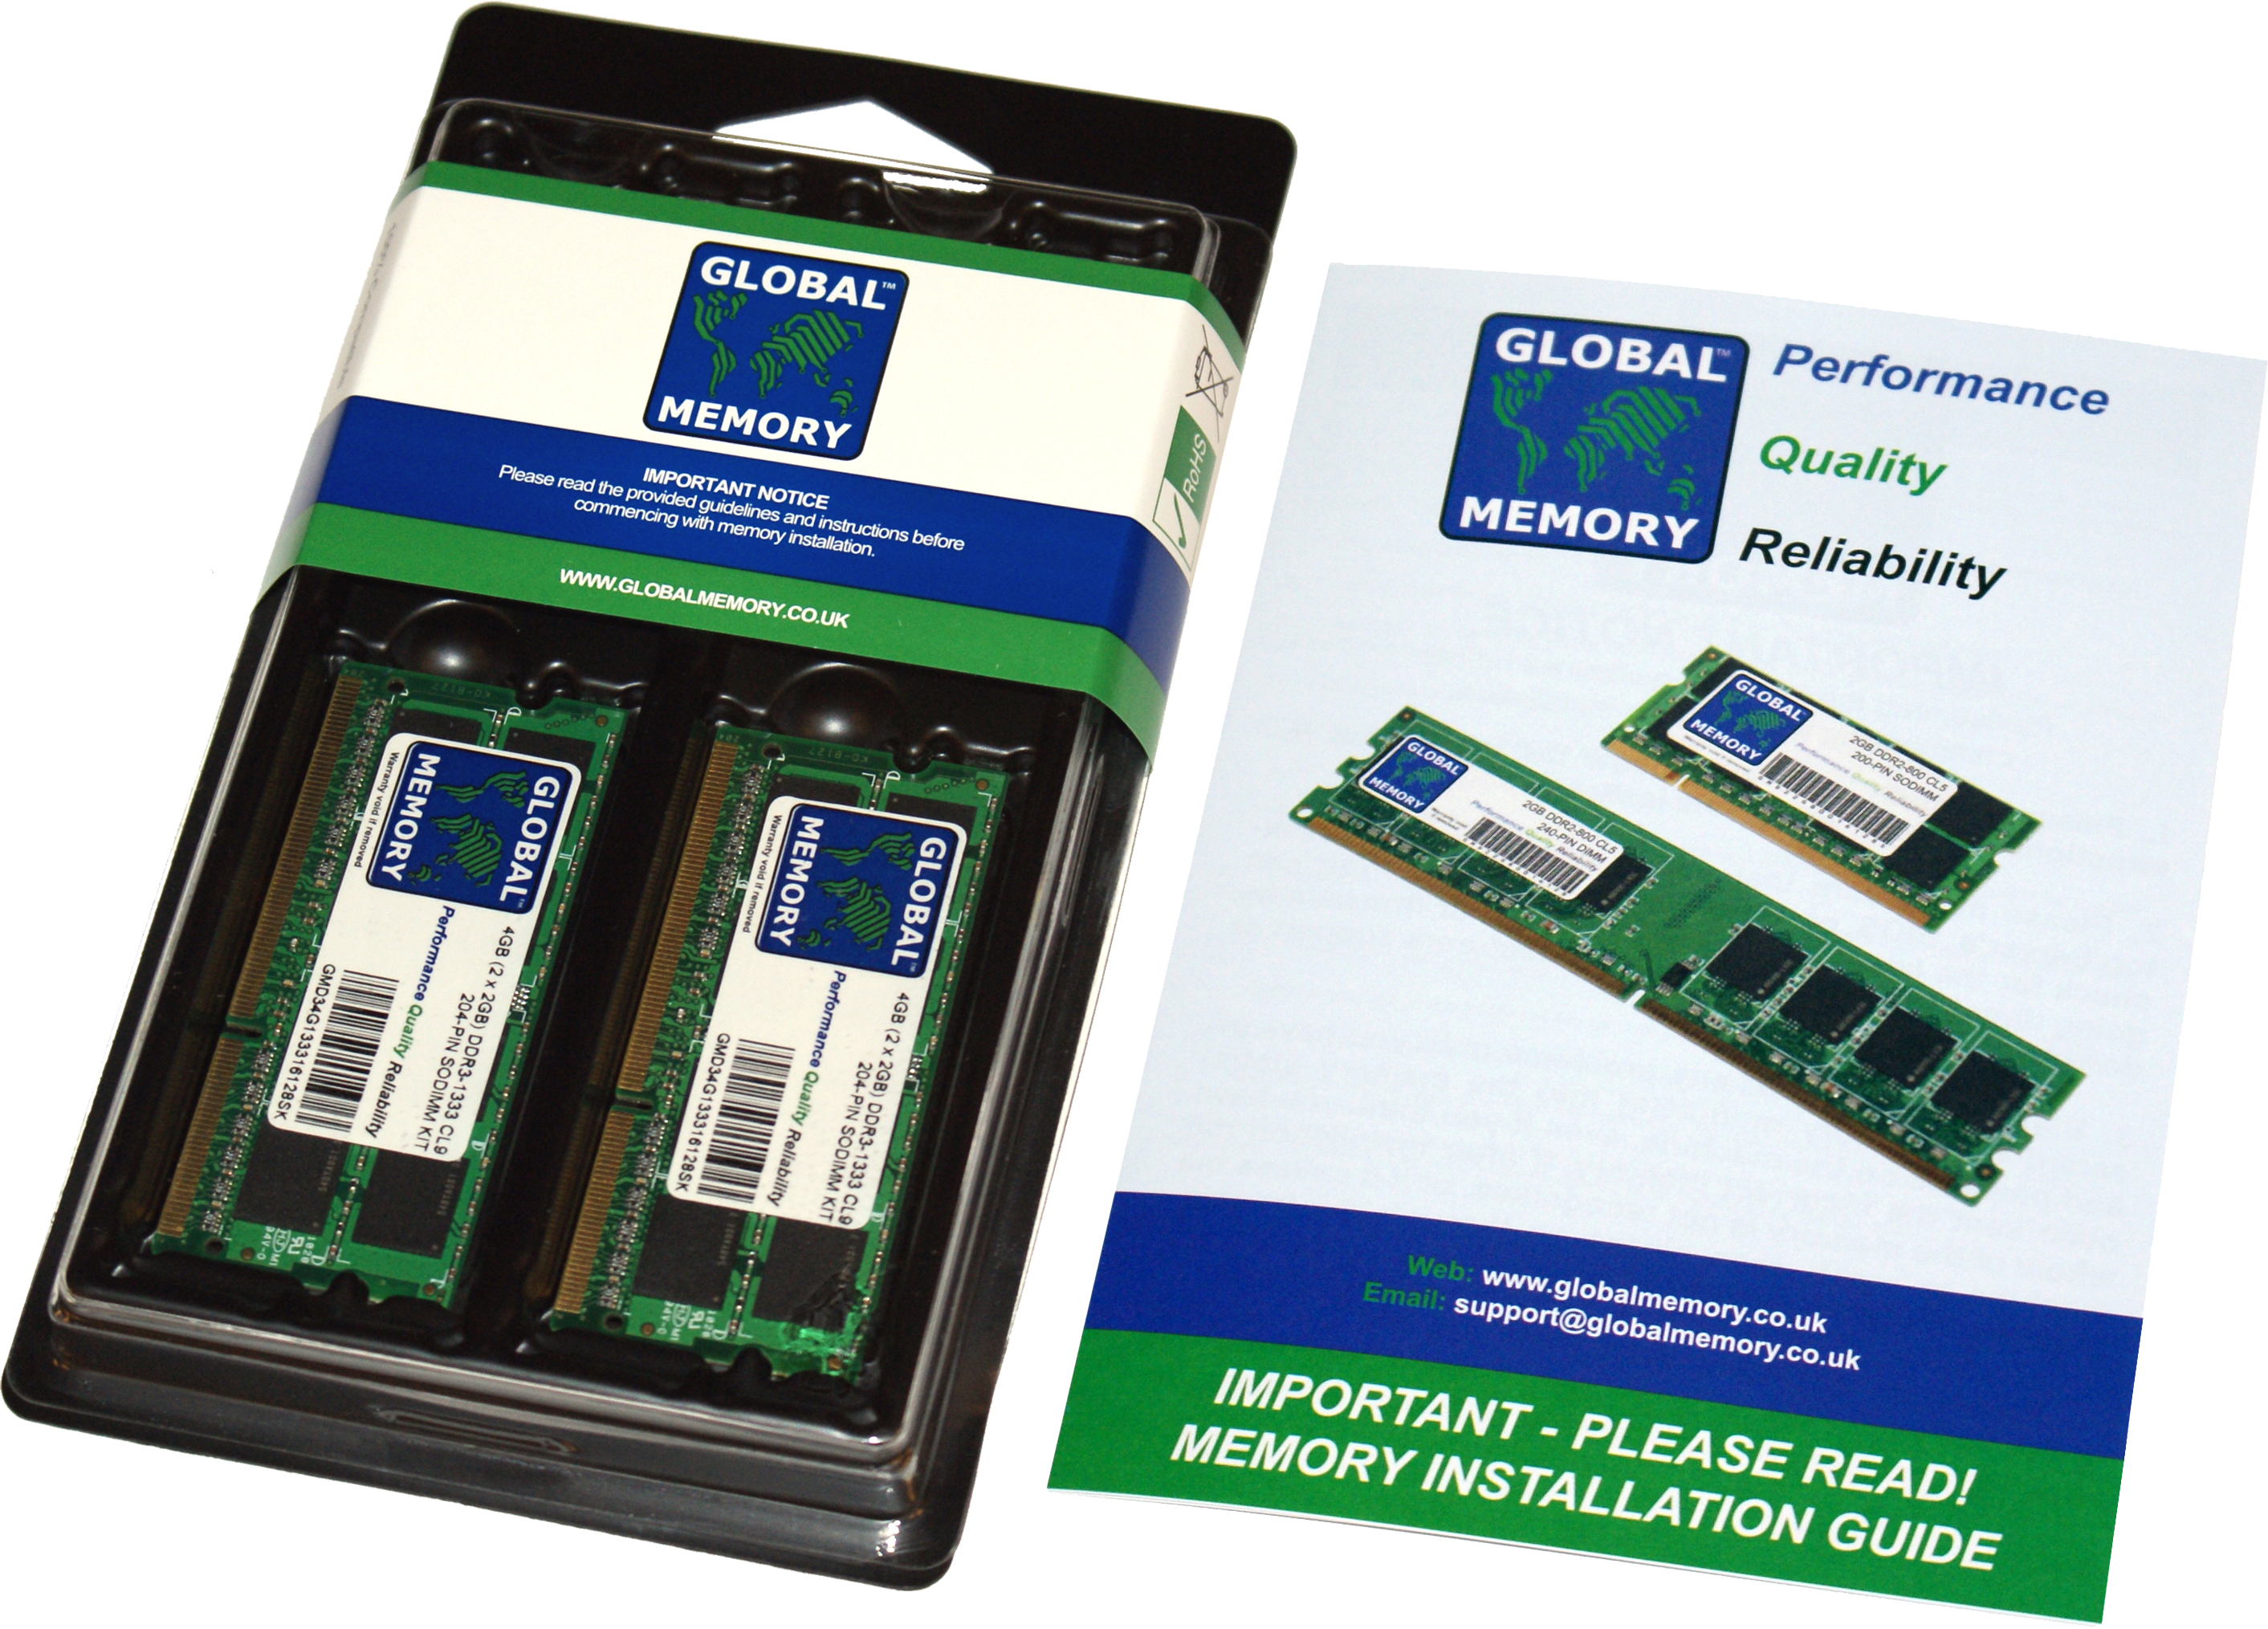 8GB (2 x 4GB) DDR3 1866MHz PC3-14900 204-PIN SODIMM MEMORY RAM KIT FOR PACKARD BELL LAPTOPS/NOTEBOOKS